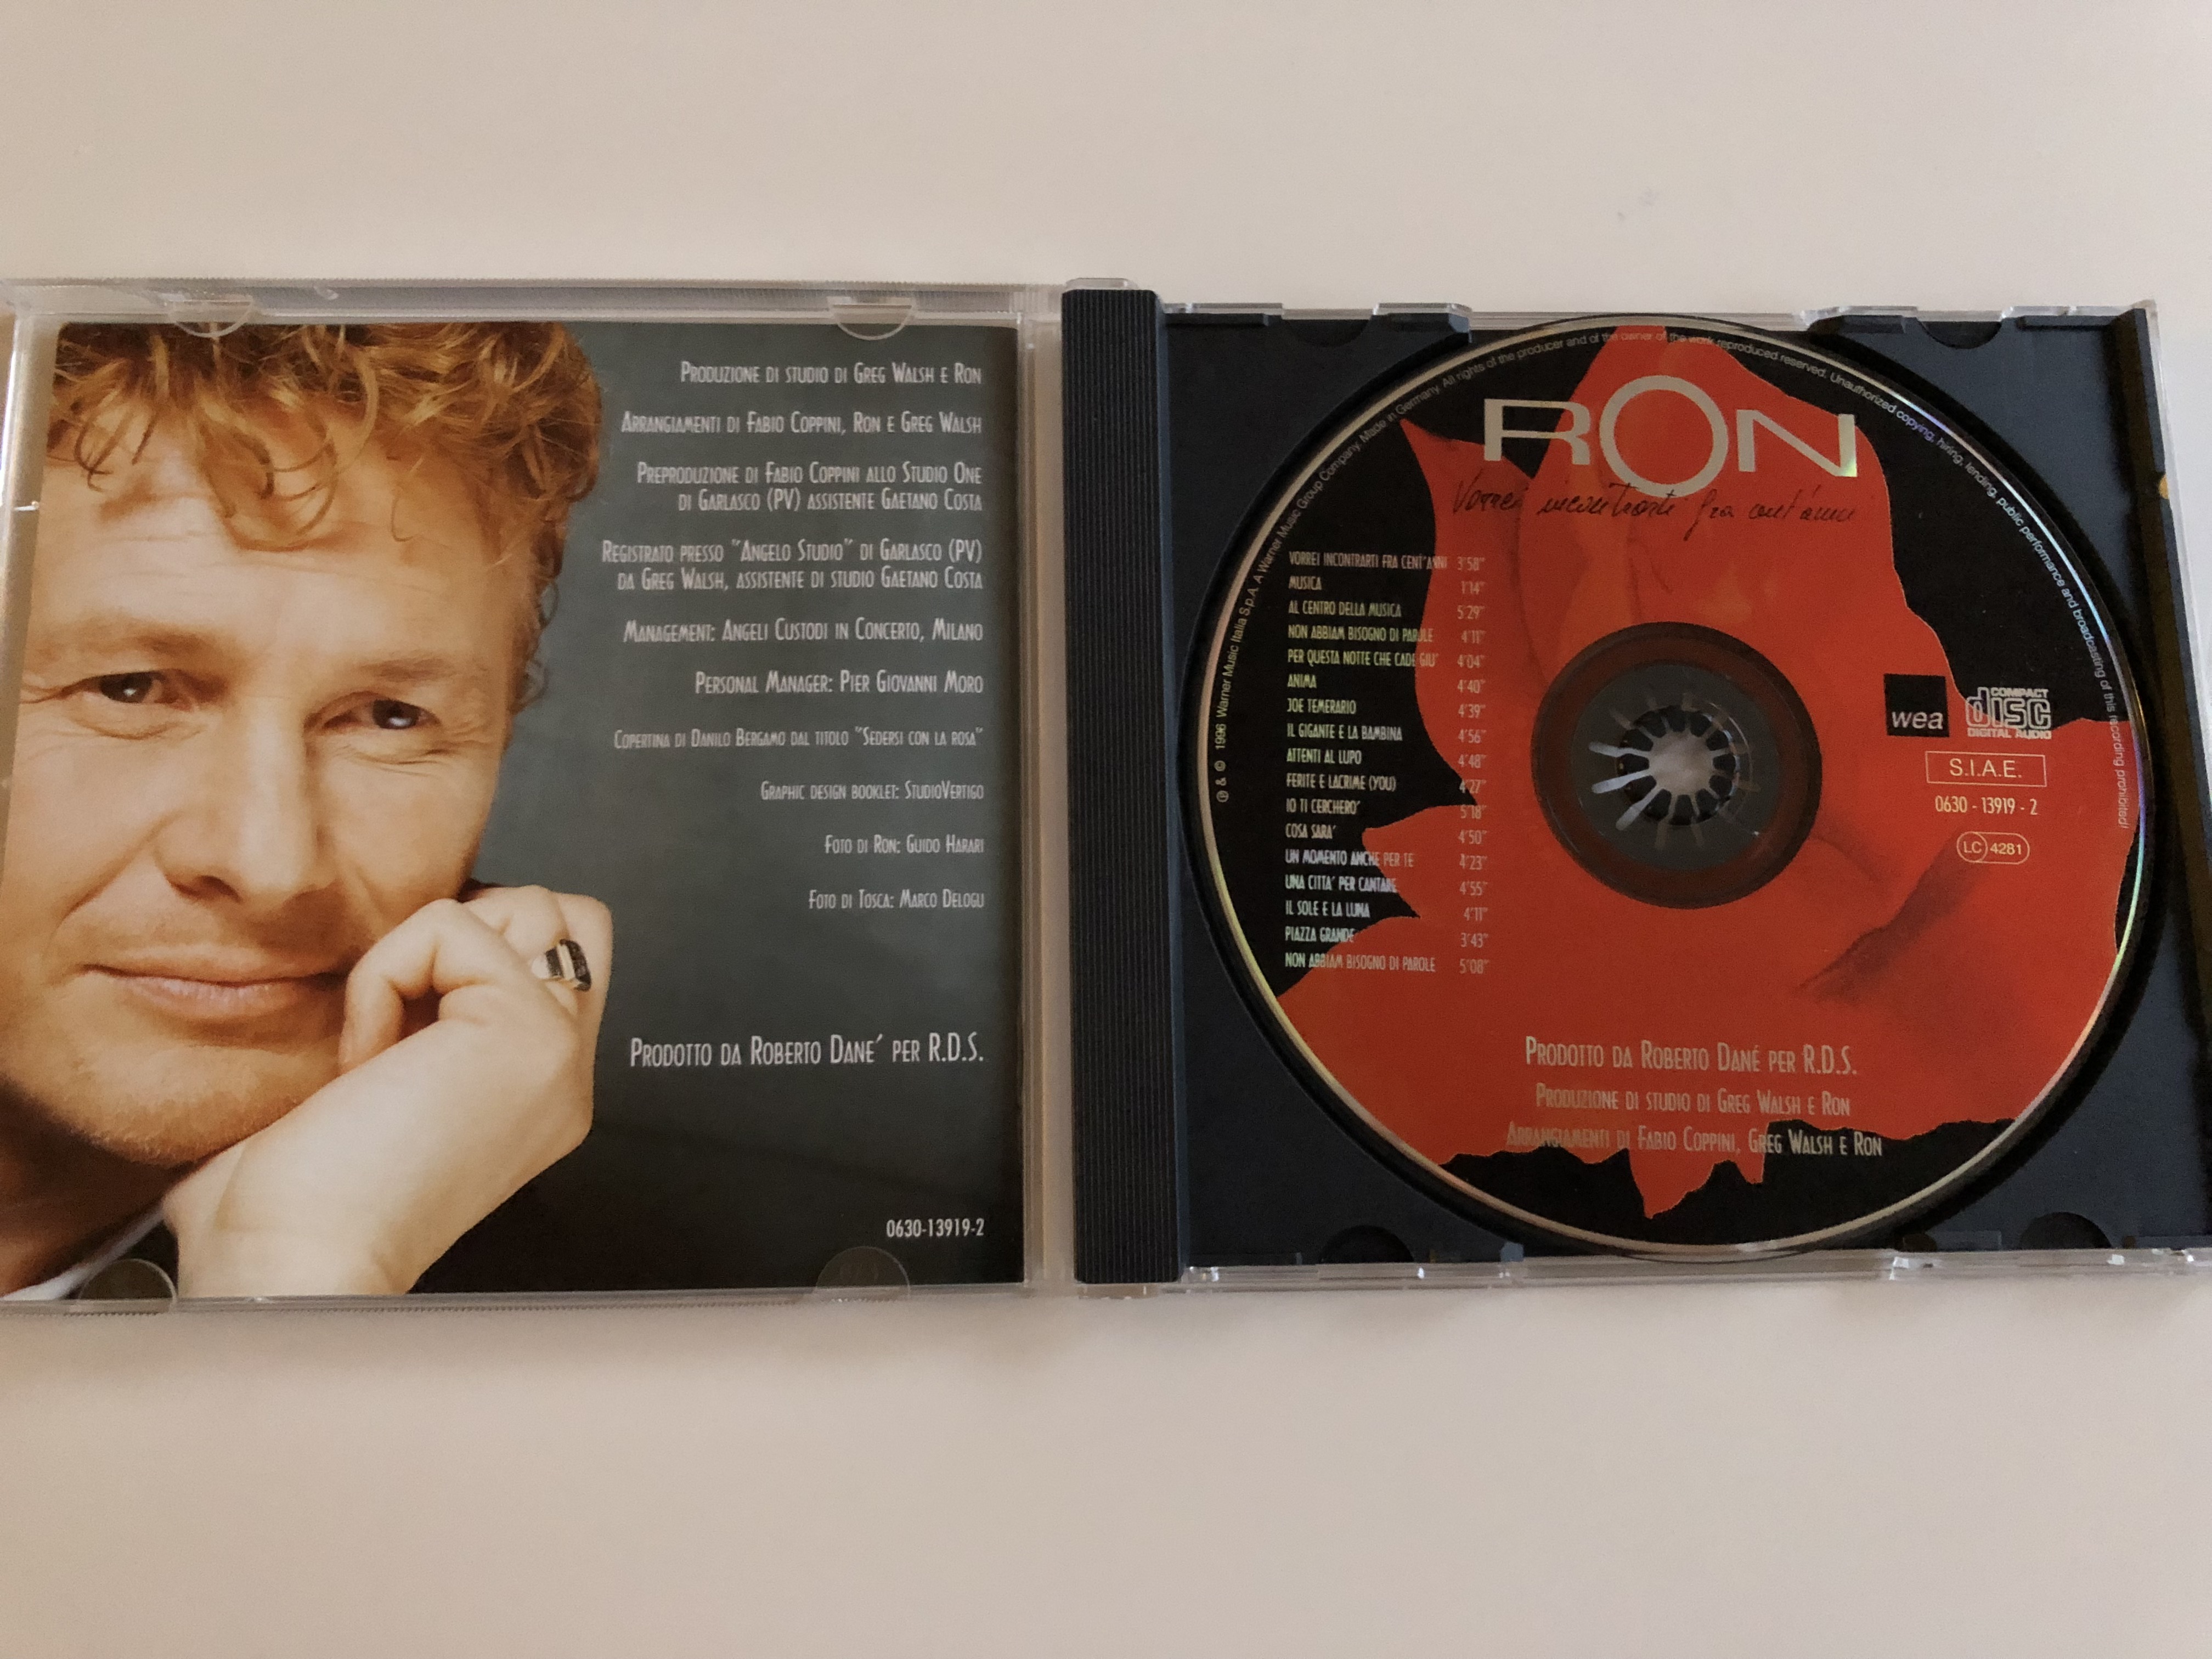 vorrei-incontrarti-fra-cent-anni-ron-wea-audio-cd-1996-0630-13919-2-9-.jpg